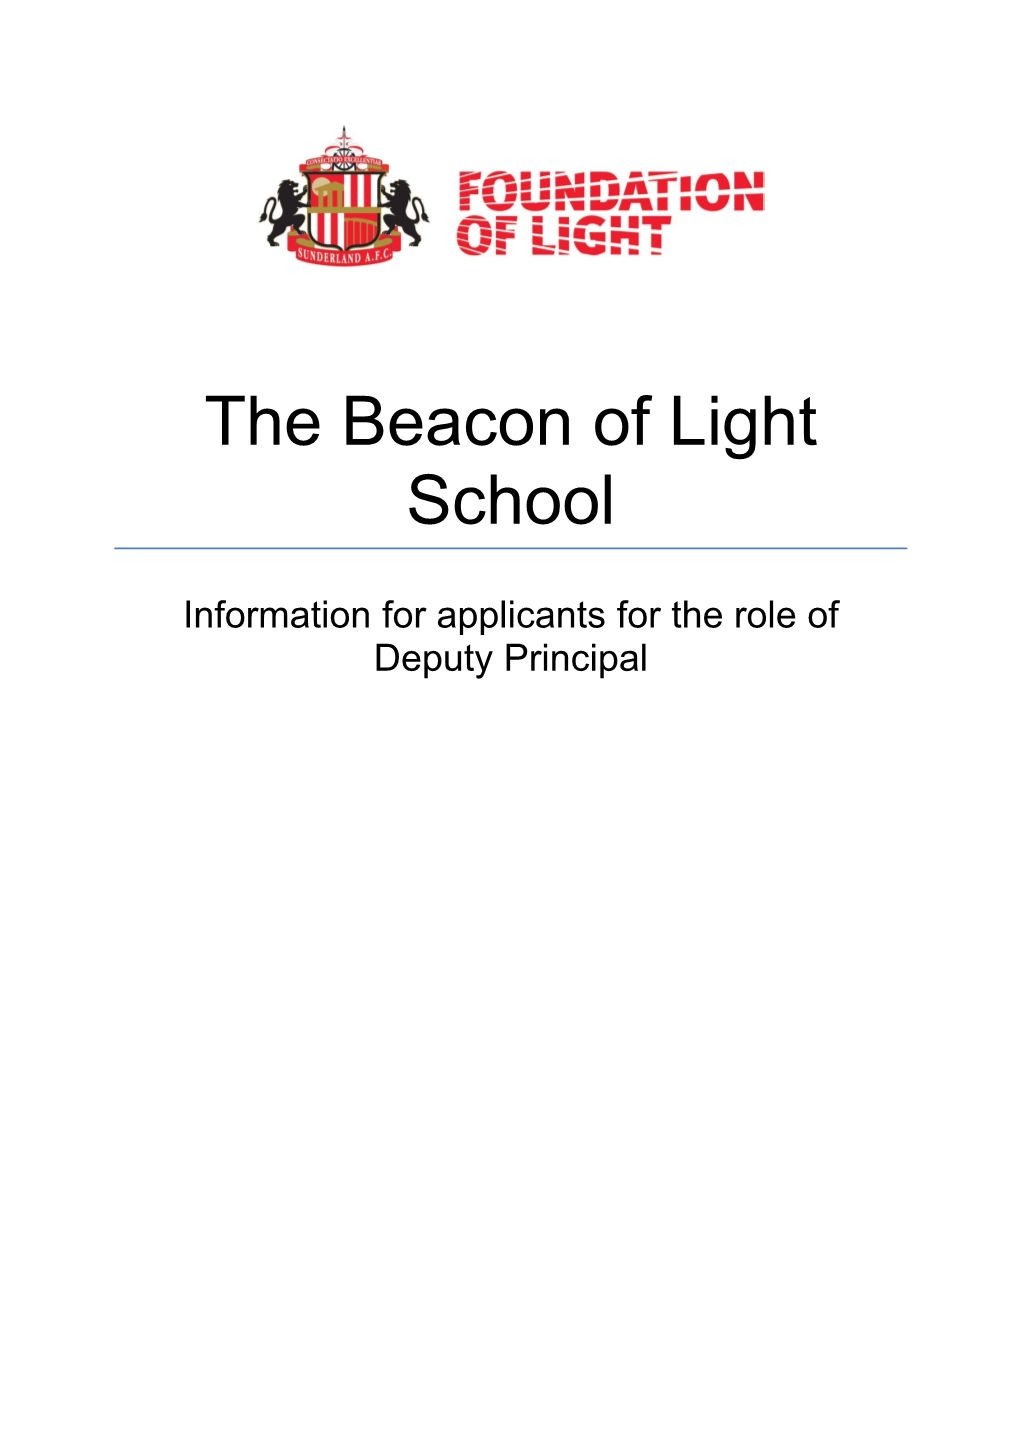 The Beacon of Light School